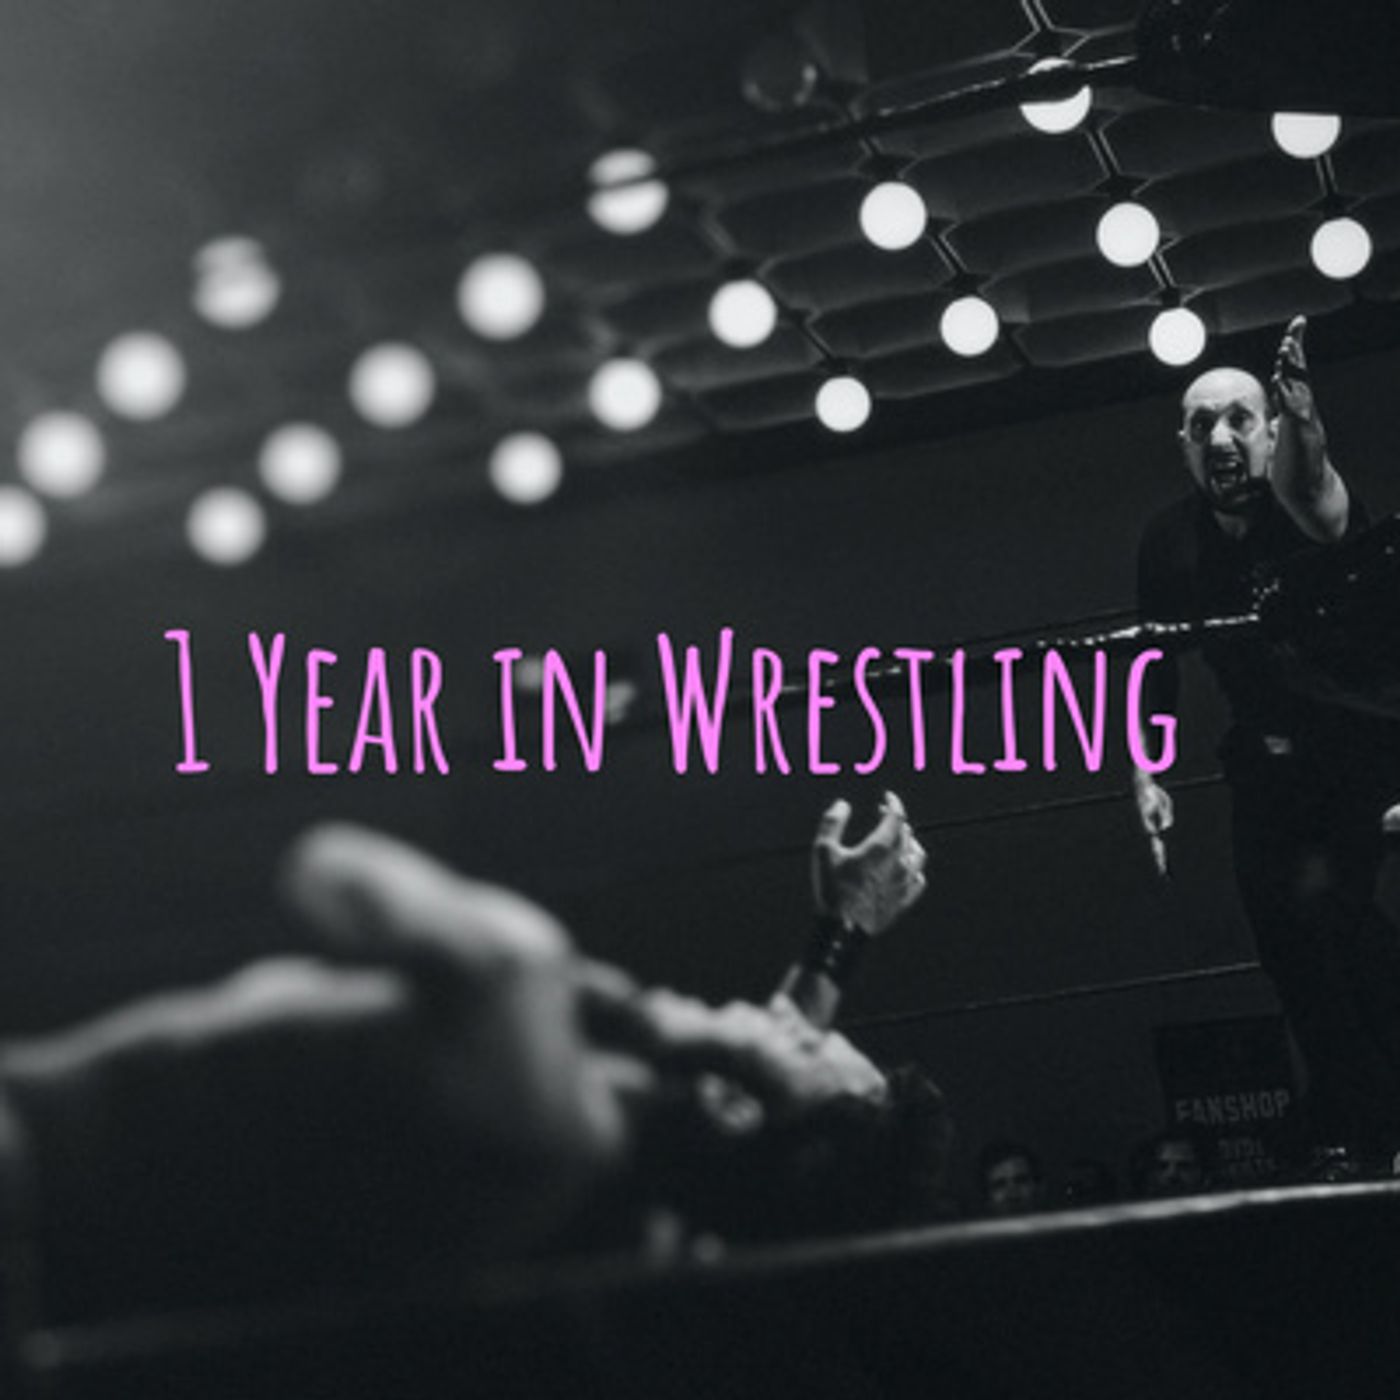 1 Year in Wrestling